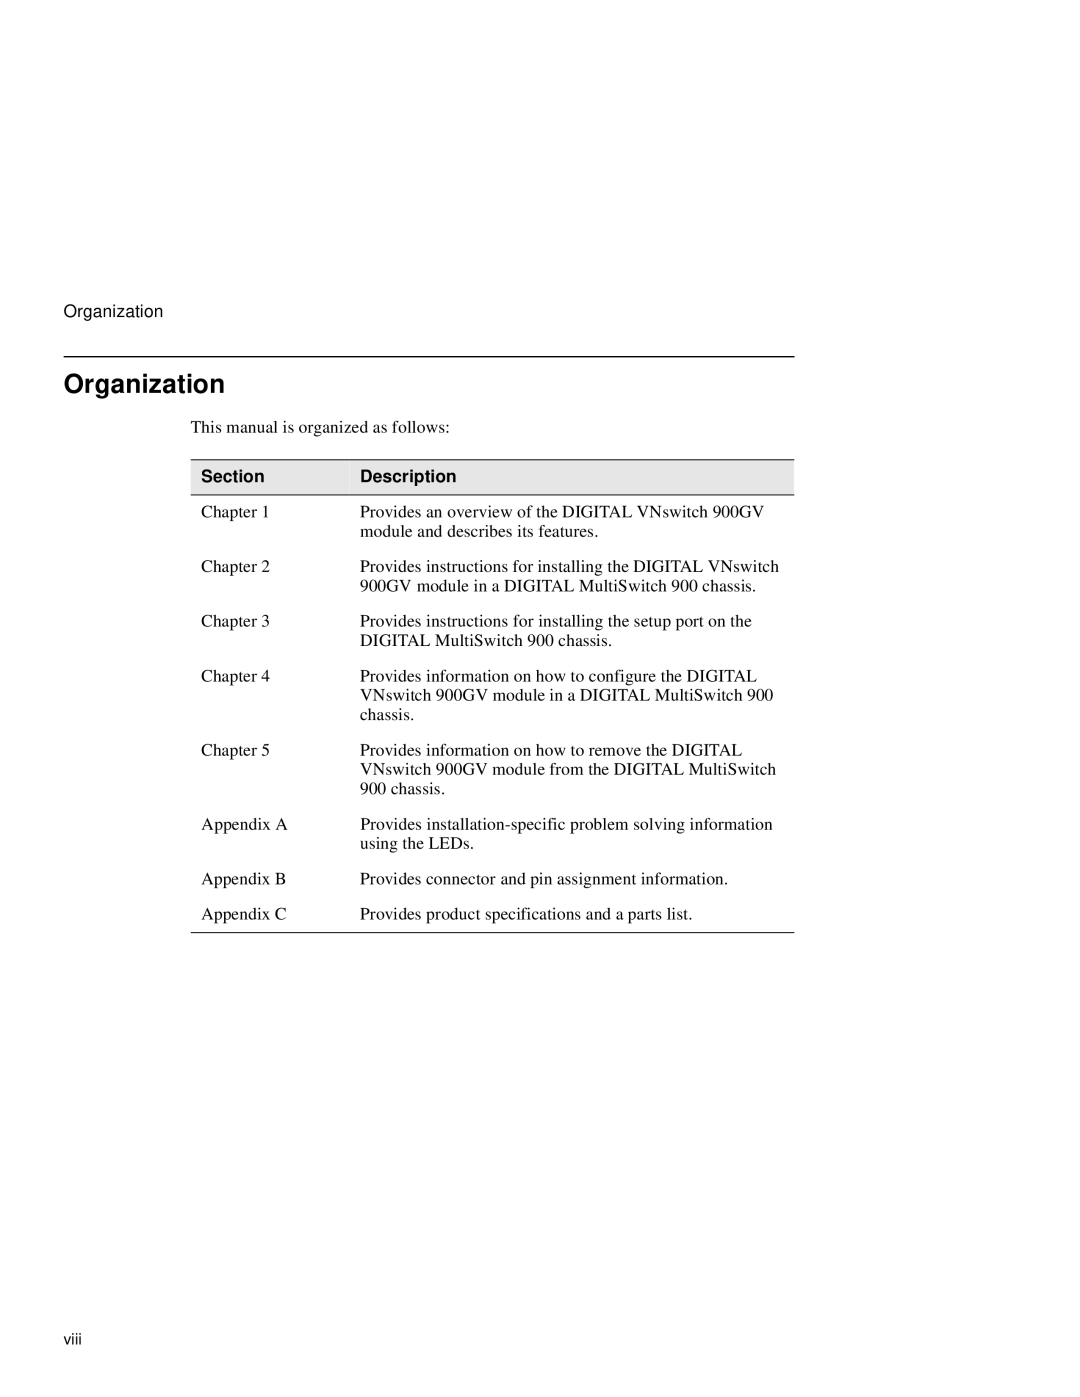 Network Technologies 900GV manual Organization, Section Description 